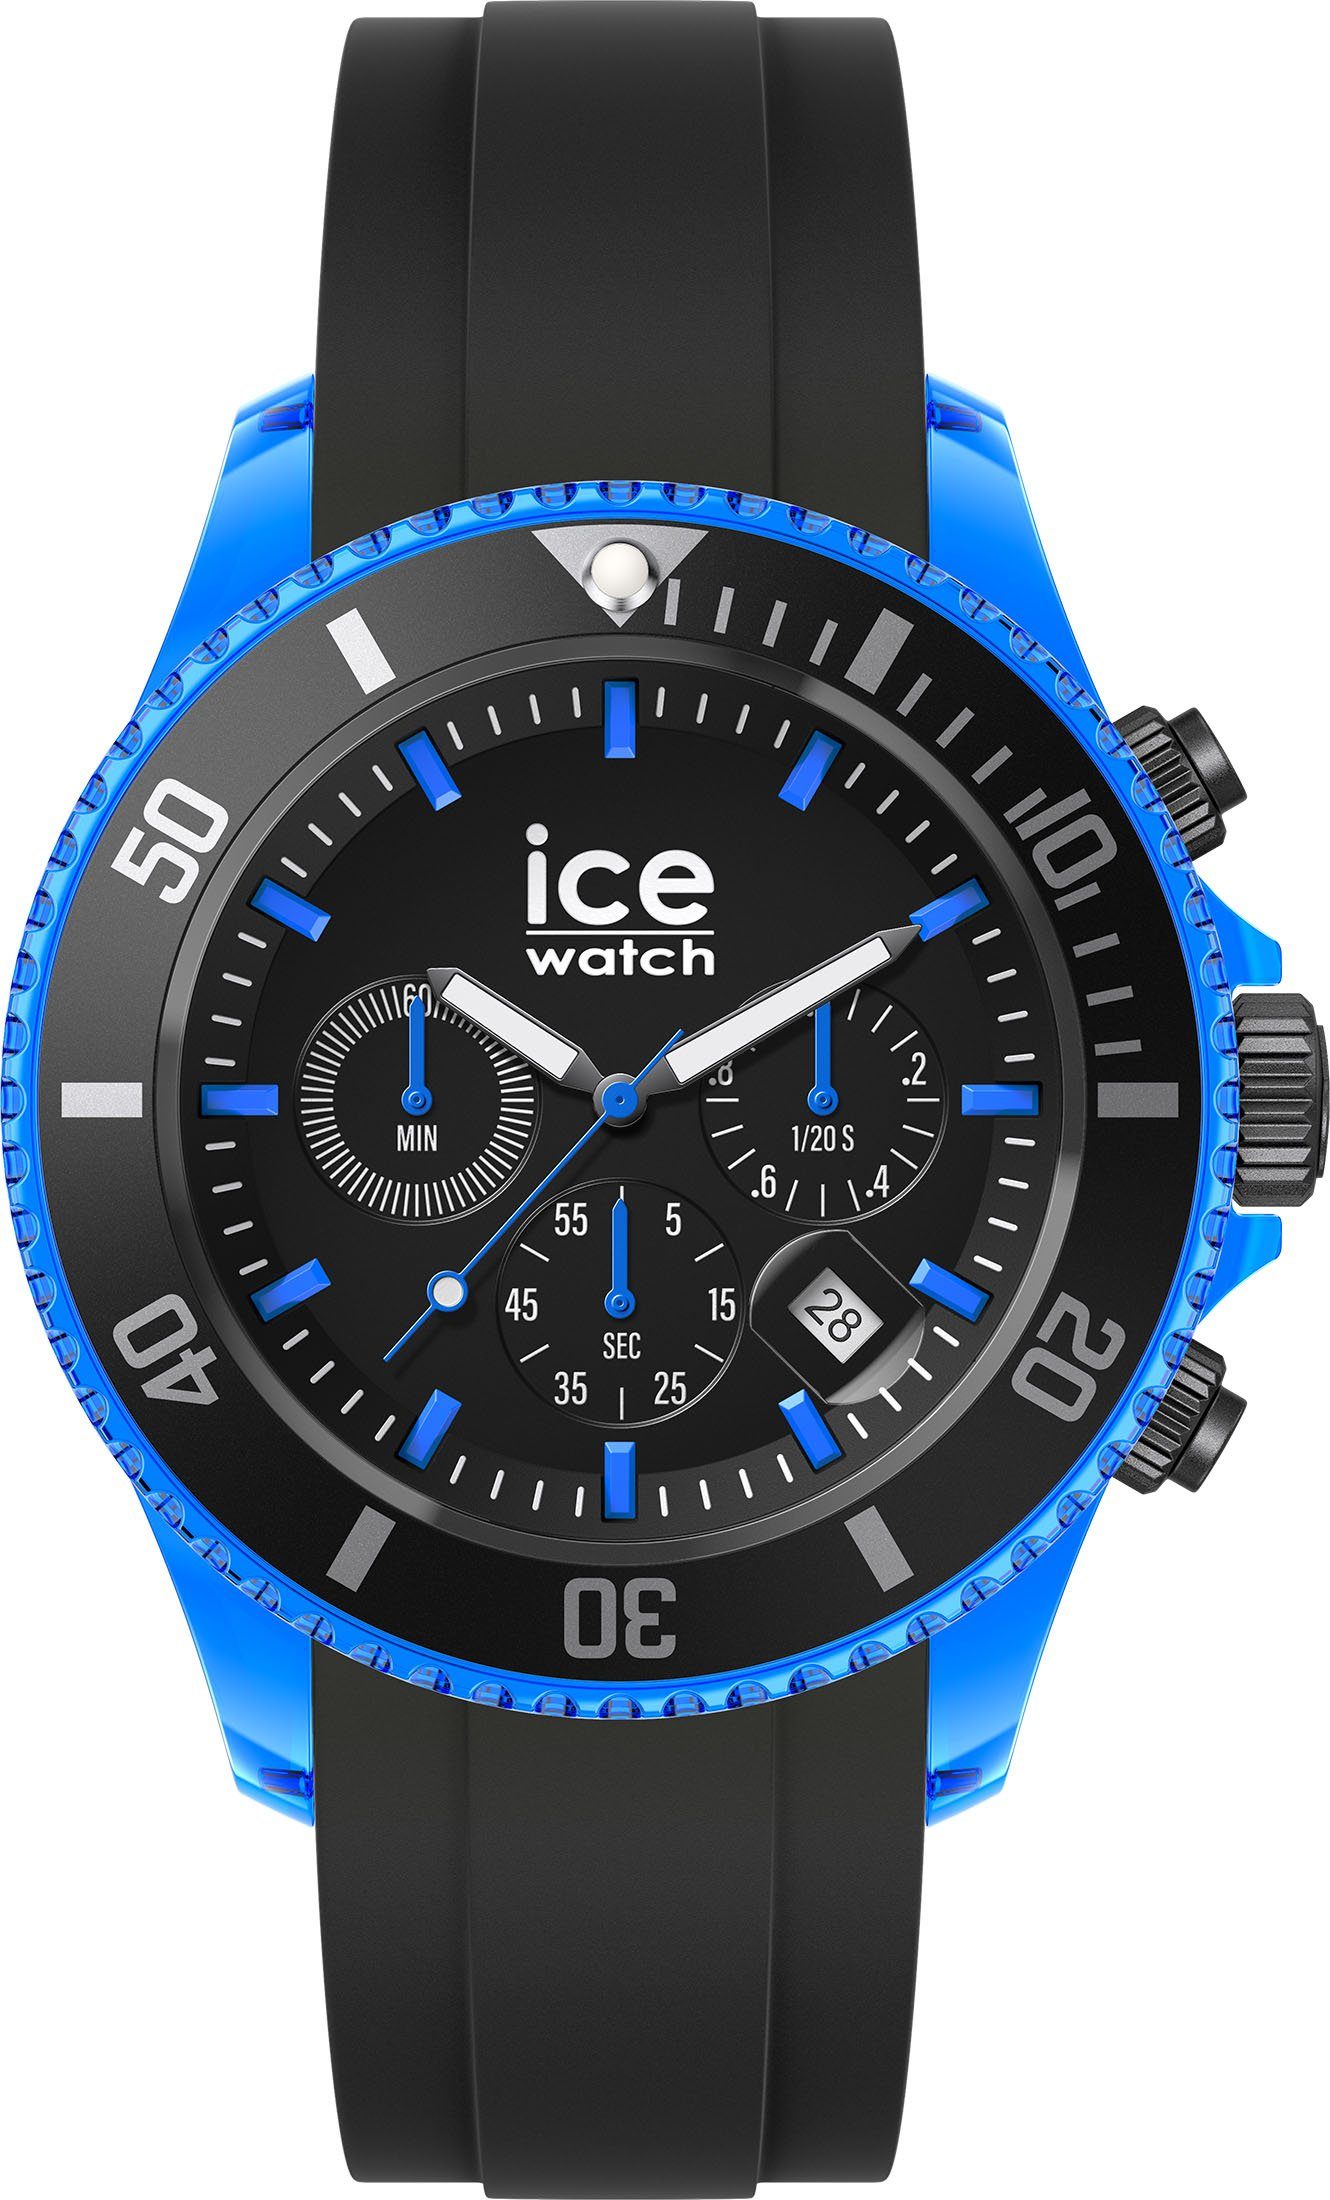 CH, 019844 Extra large - blue ice-watch ICE chrono - Chronograph - Black